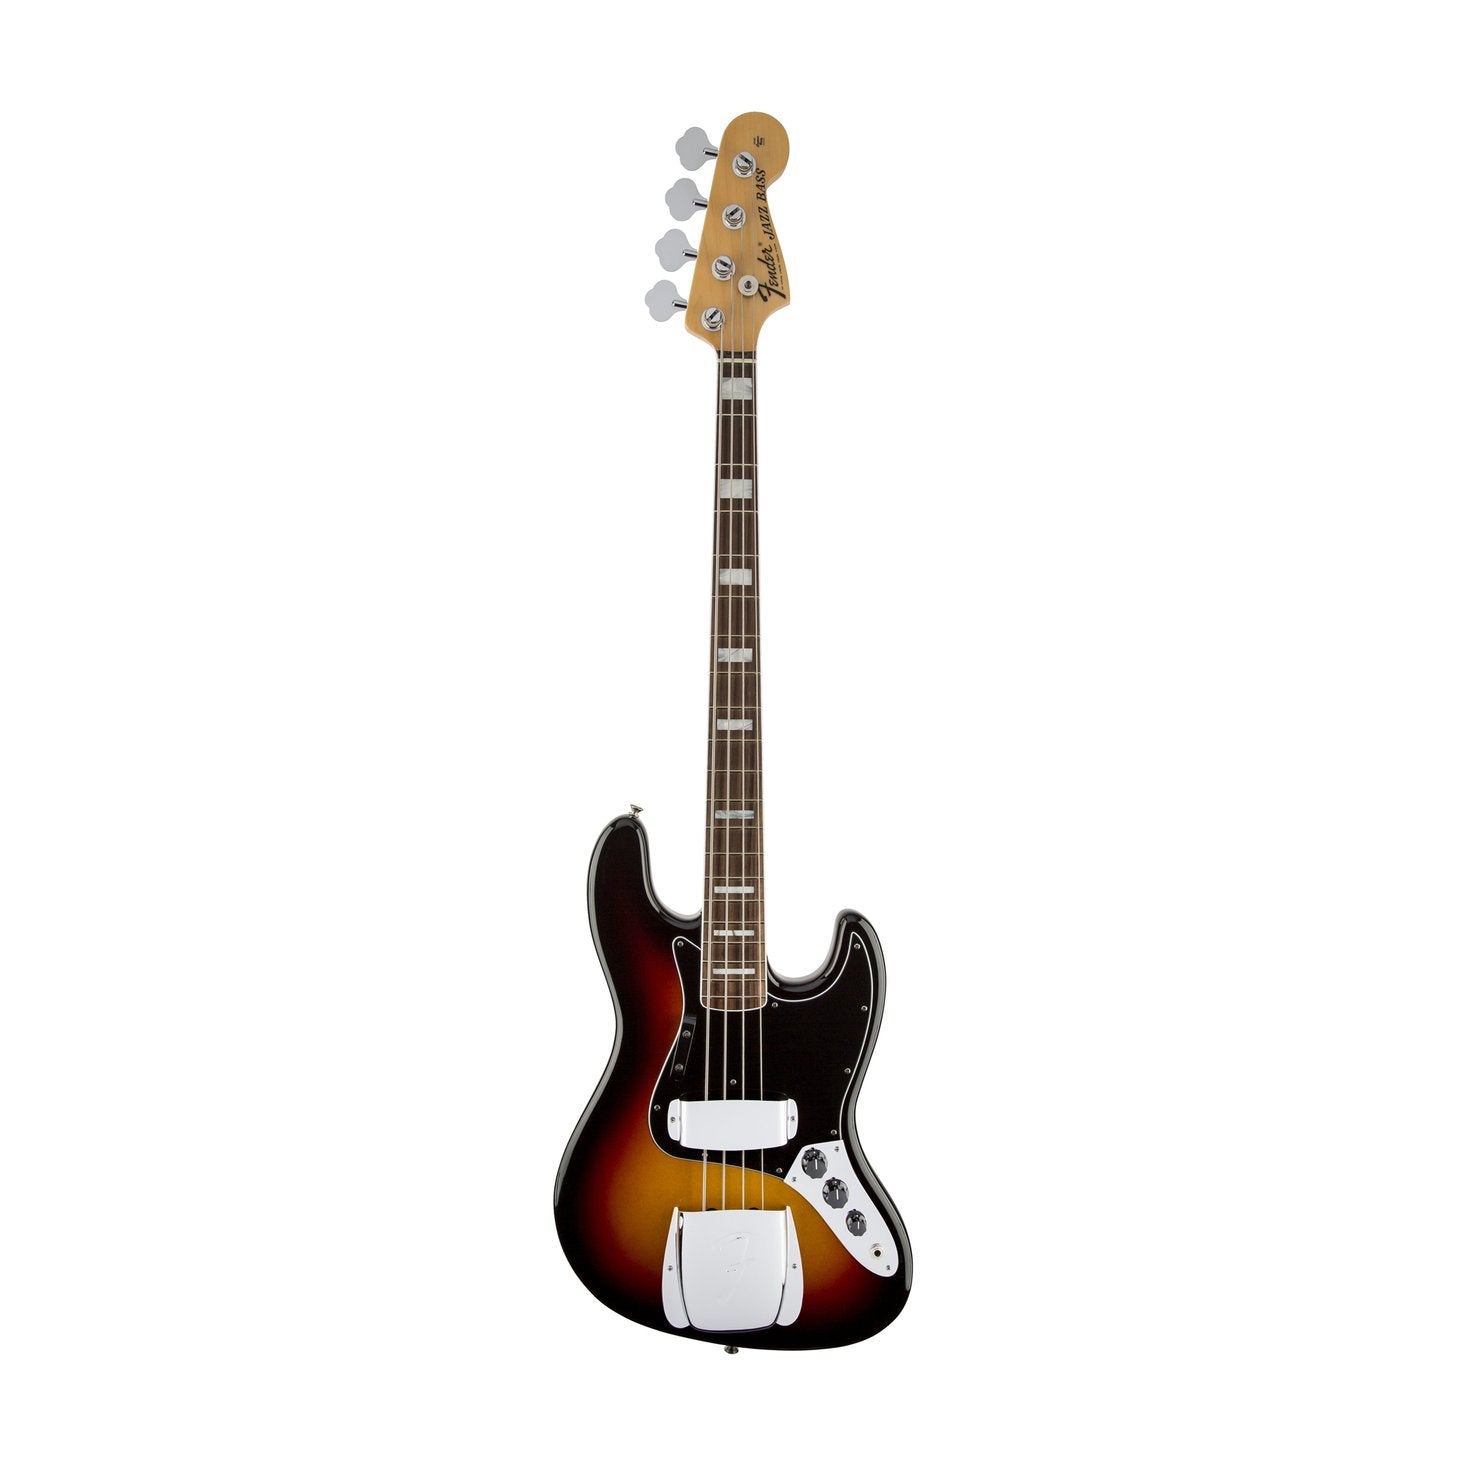 Fender American Vintage 74 Jazz Bass Guitar, Rosewood Neck , 3-Tone Sunburst, FENDER, BASS GUITAR, fender-bass-guitar-f03-019-1030-800, ZOSO MUSIC SDN BHD